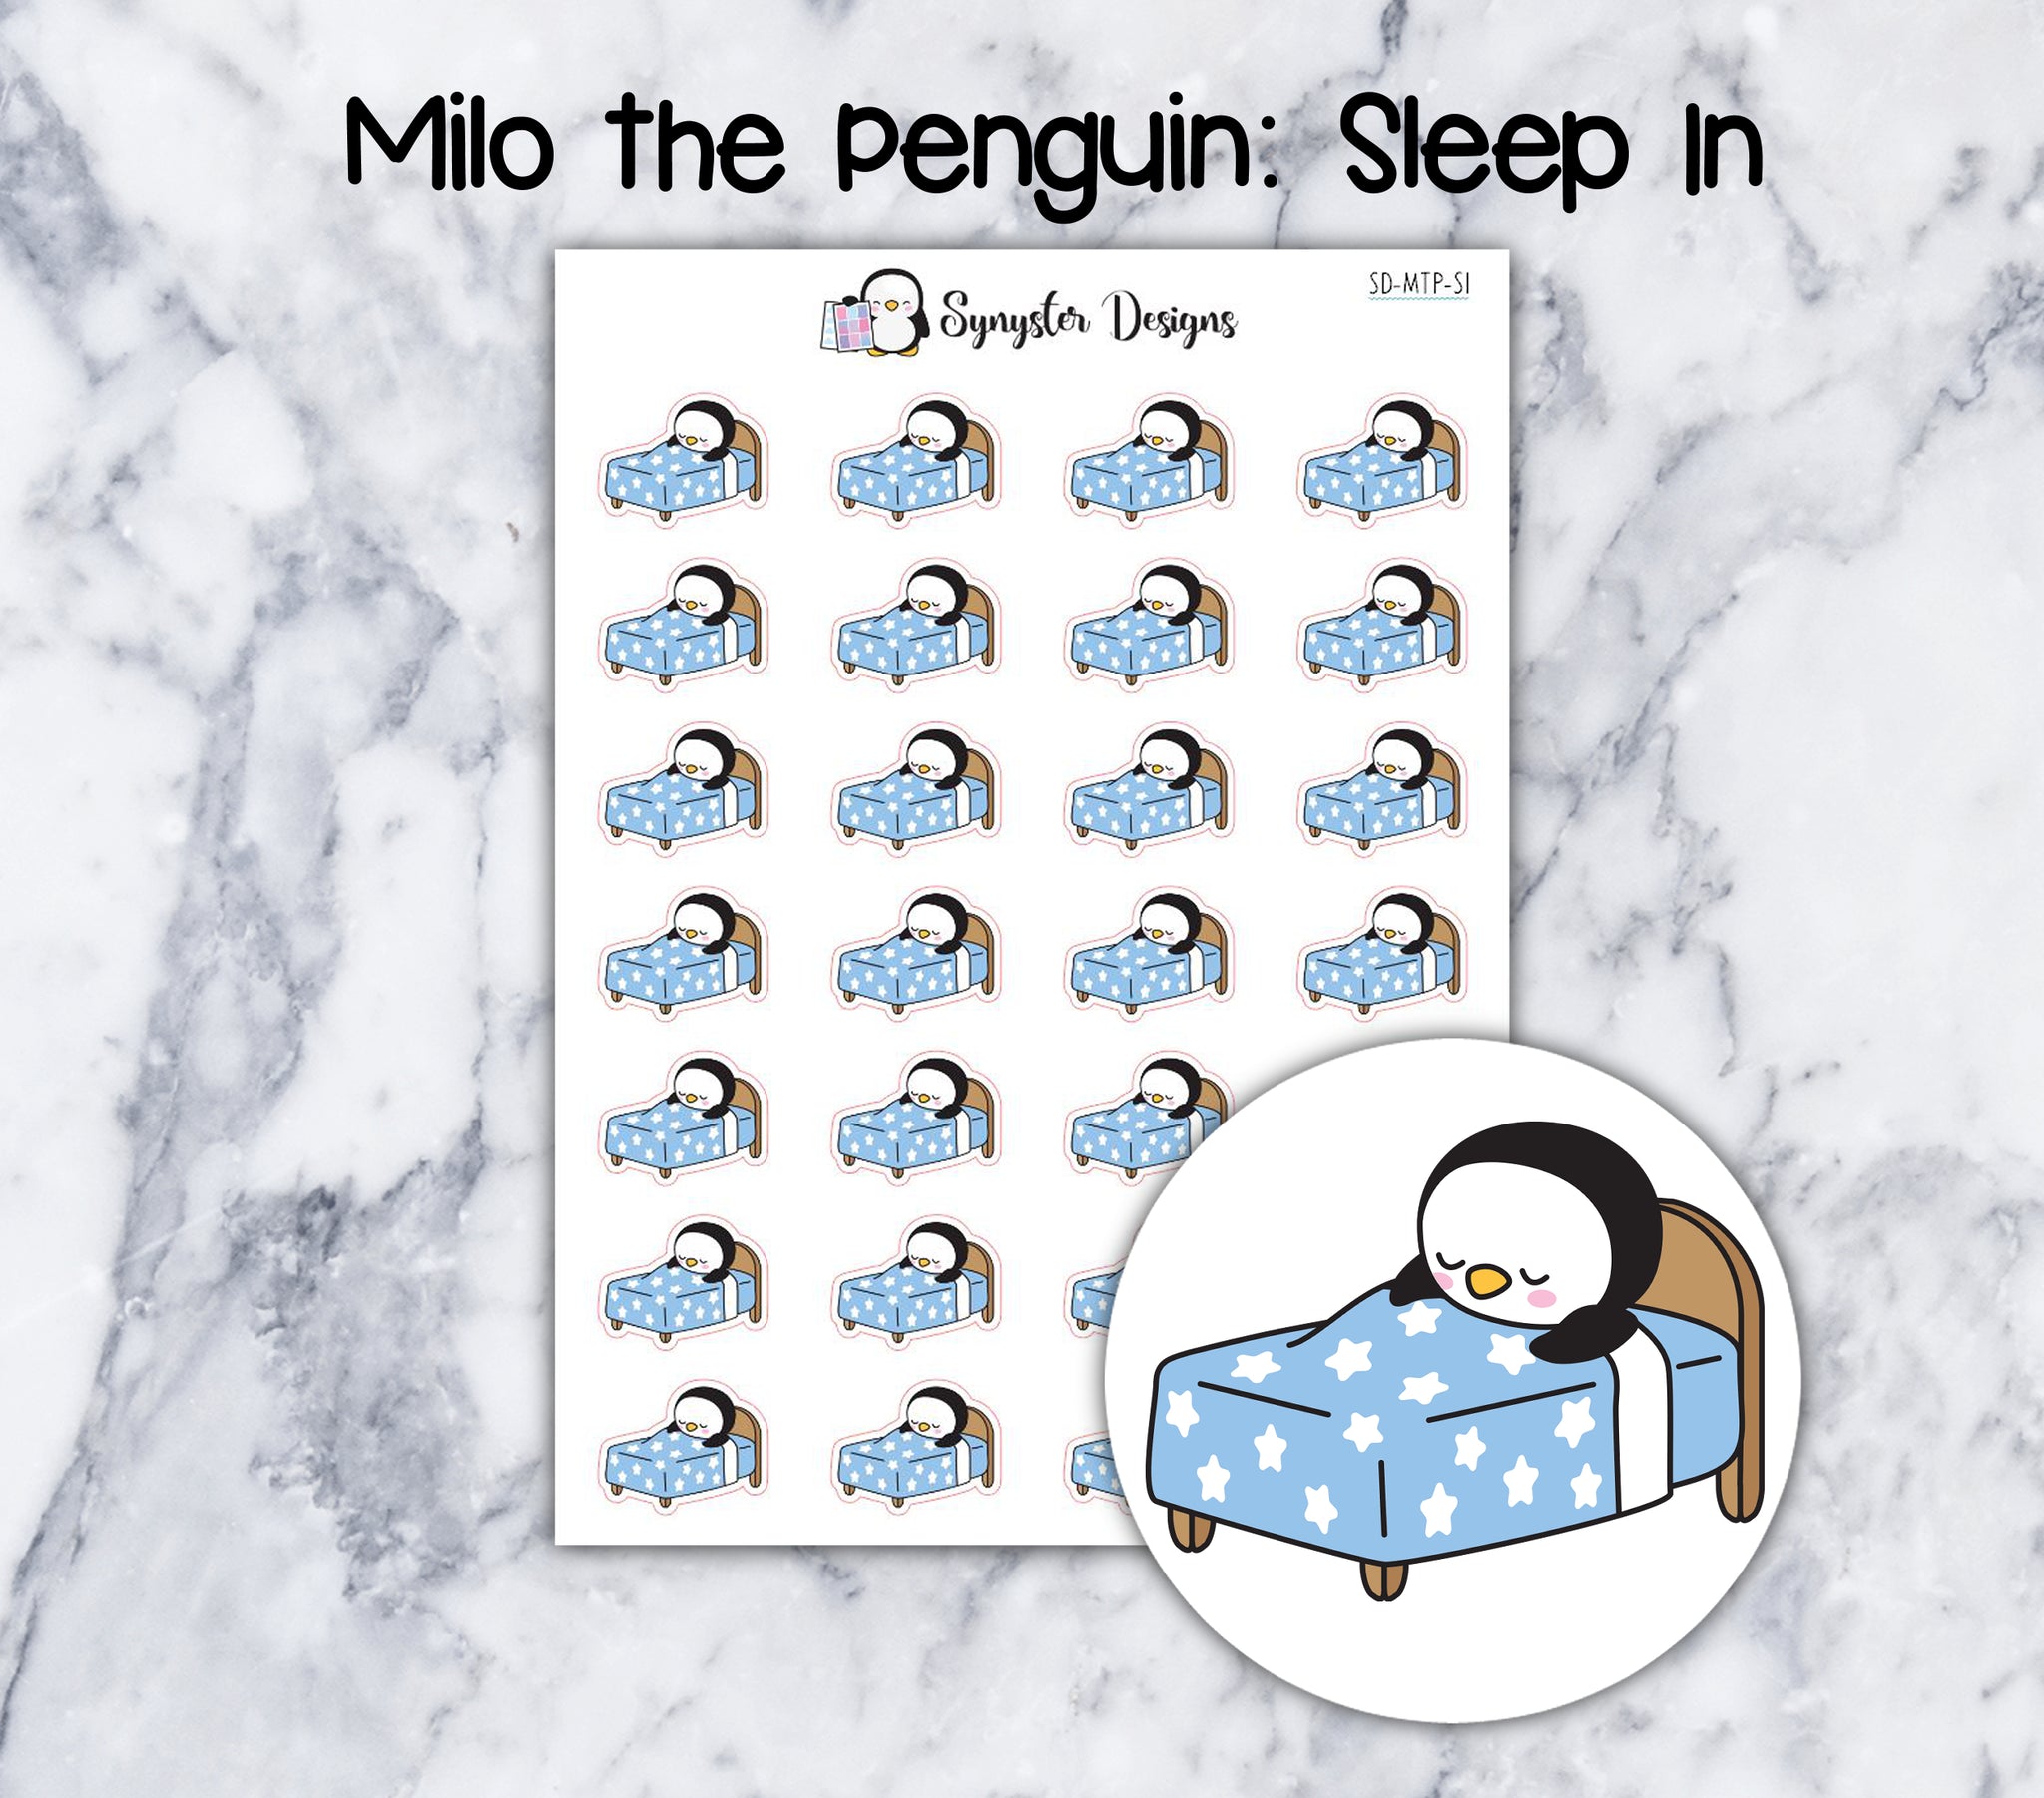 Sleep in Milo the Penguin